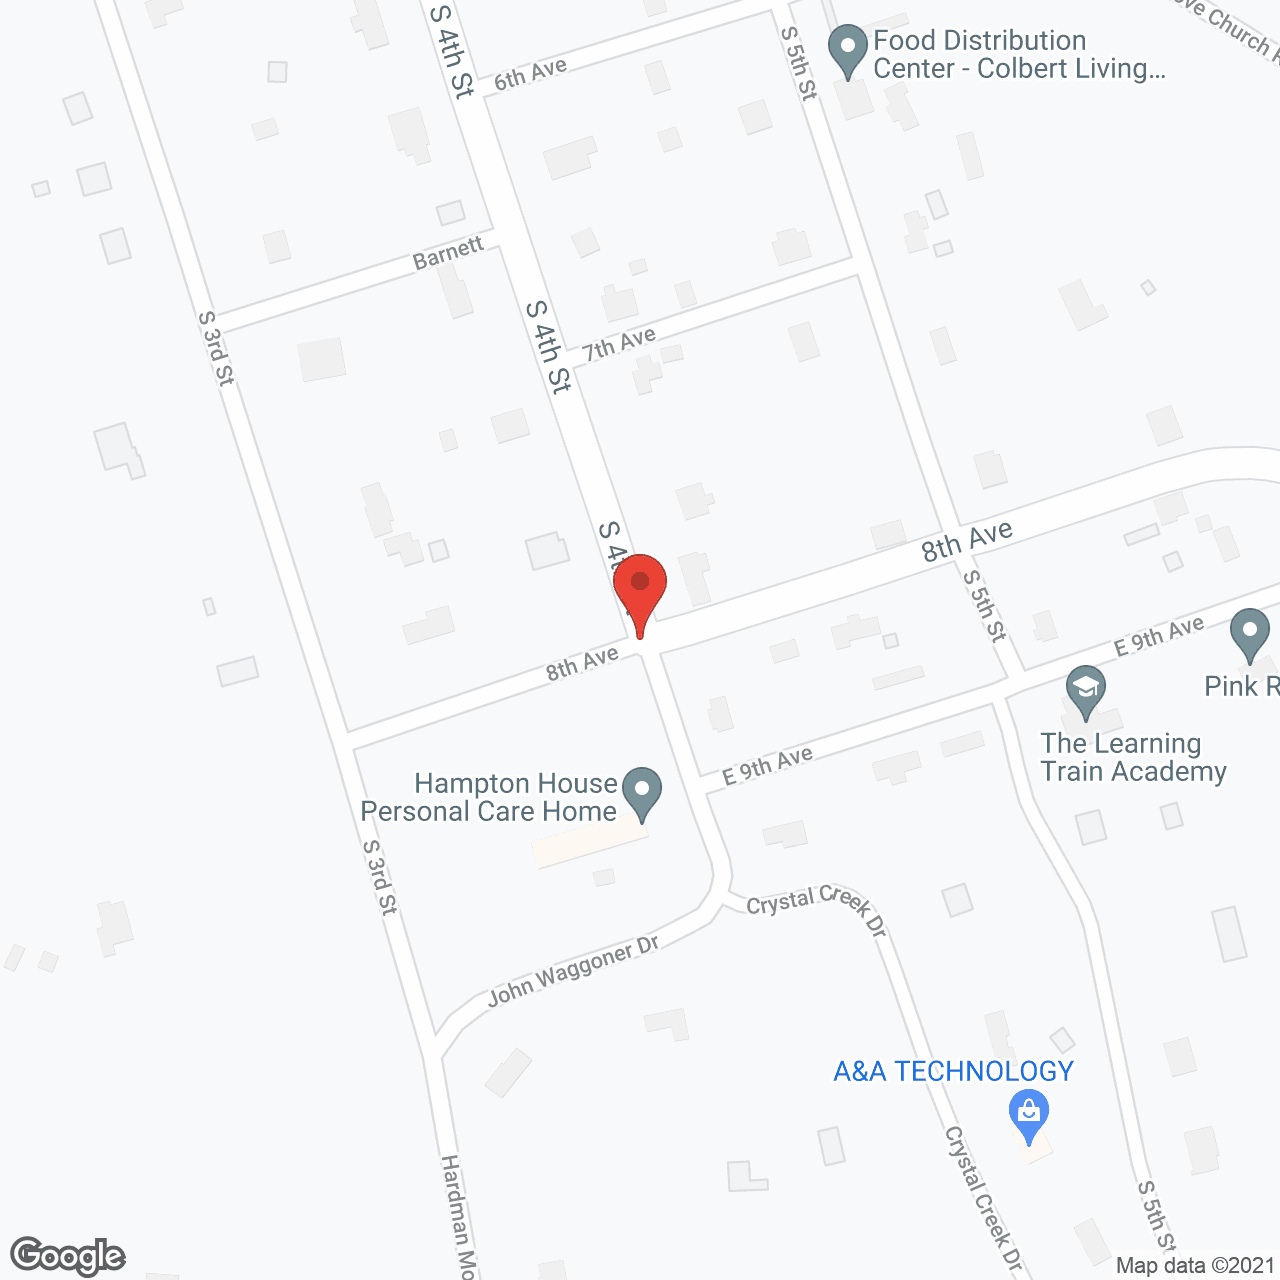 Hampton House Facility in google map